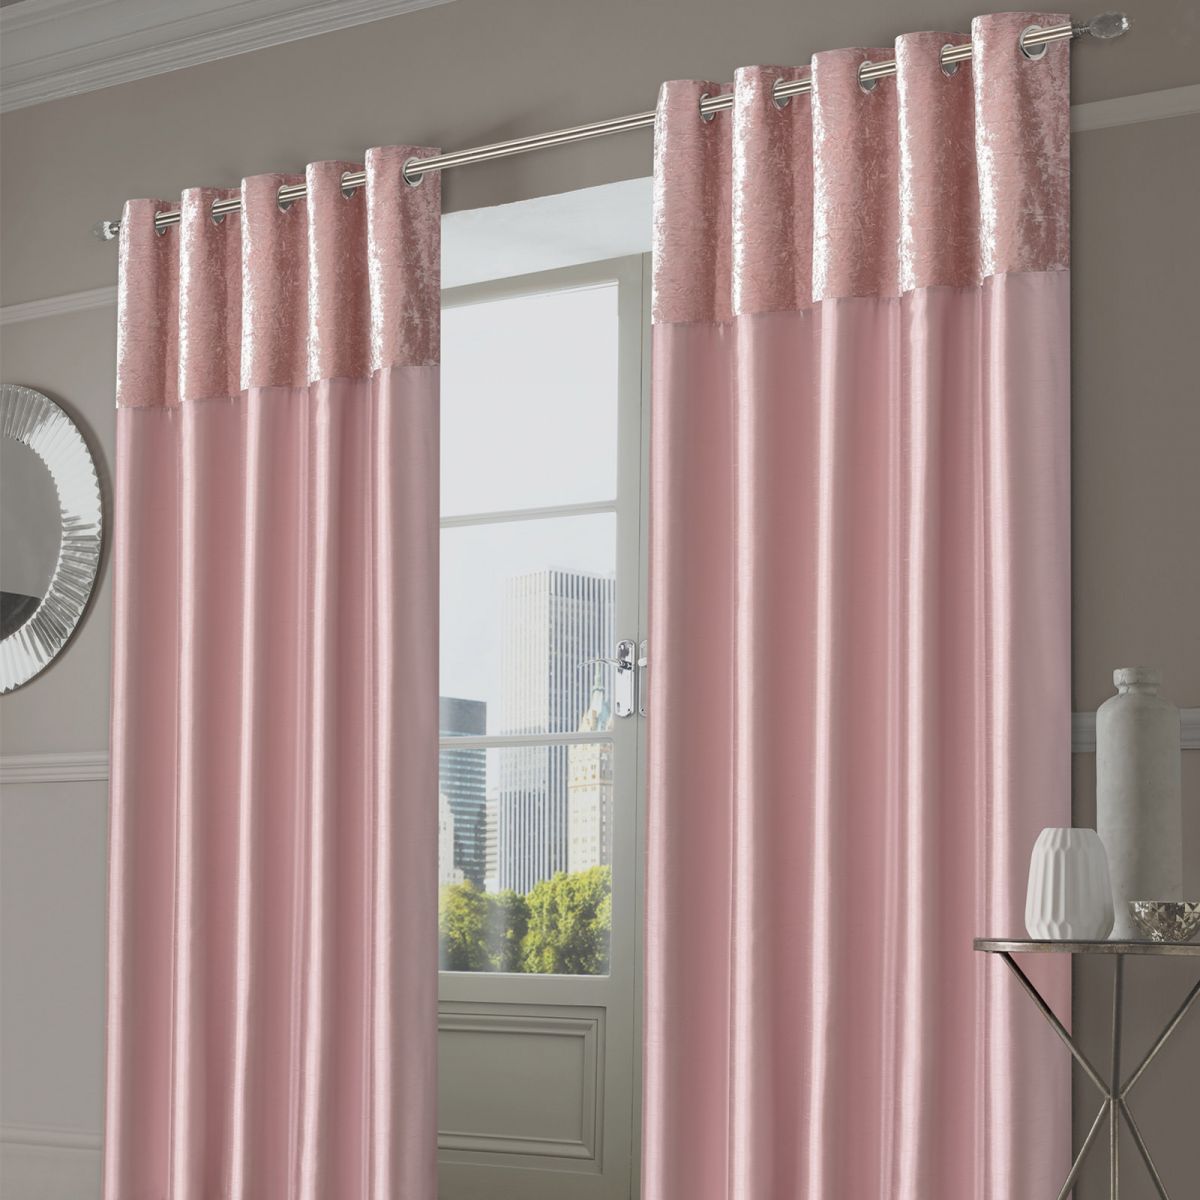 Sienna Home Manhattan Crushed Velvet Band Eyelet Curtains - Blush Pink, 90" x 90"